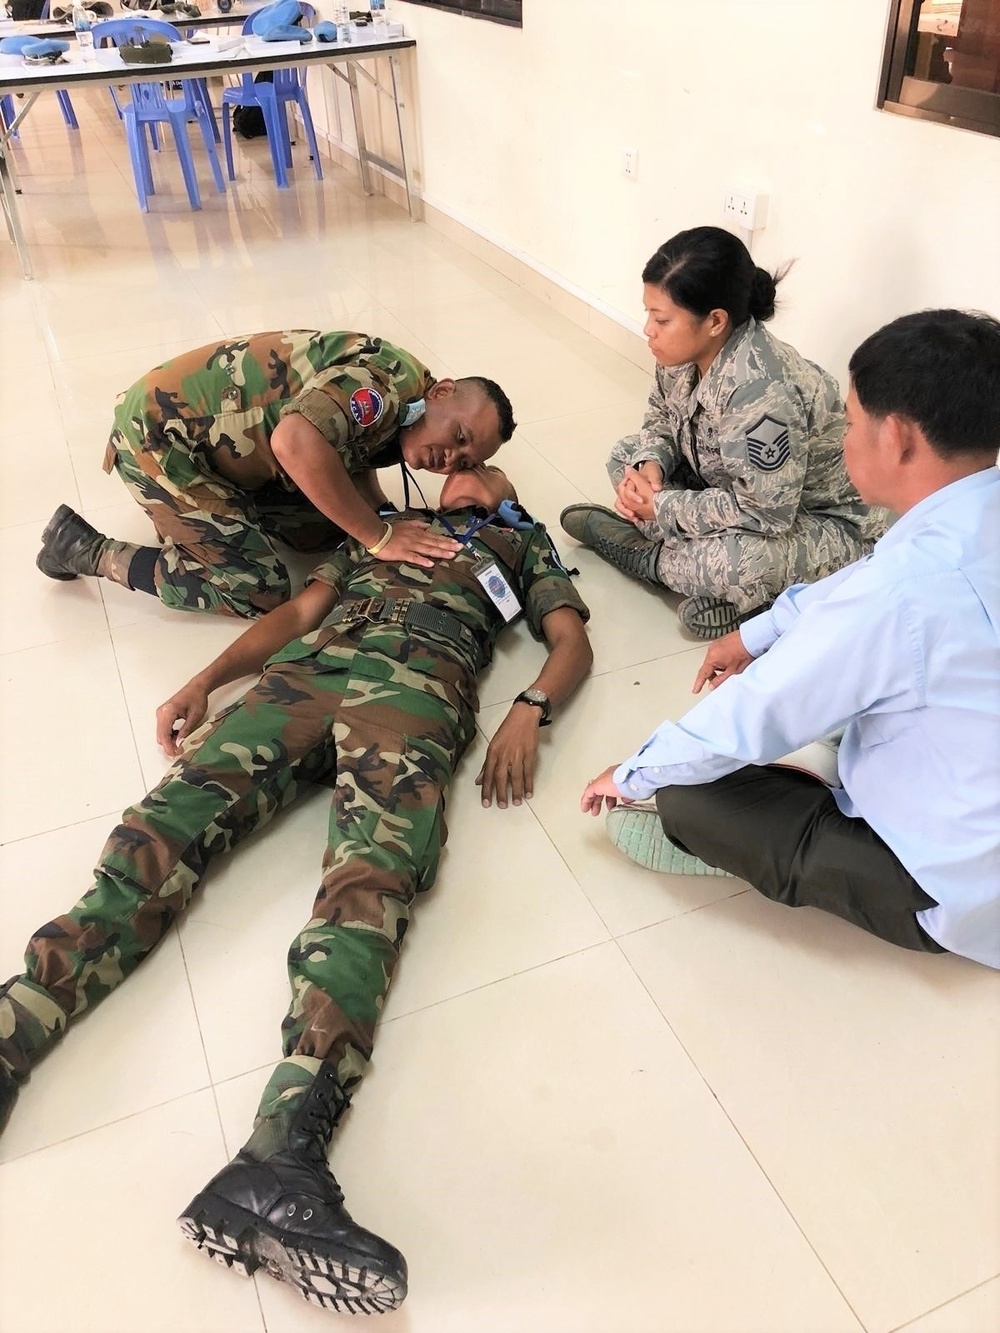 Idaho Guardsmen visit Cambodia to share skills, strengthen ties